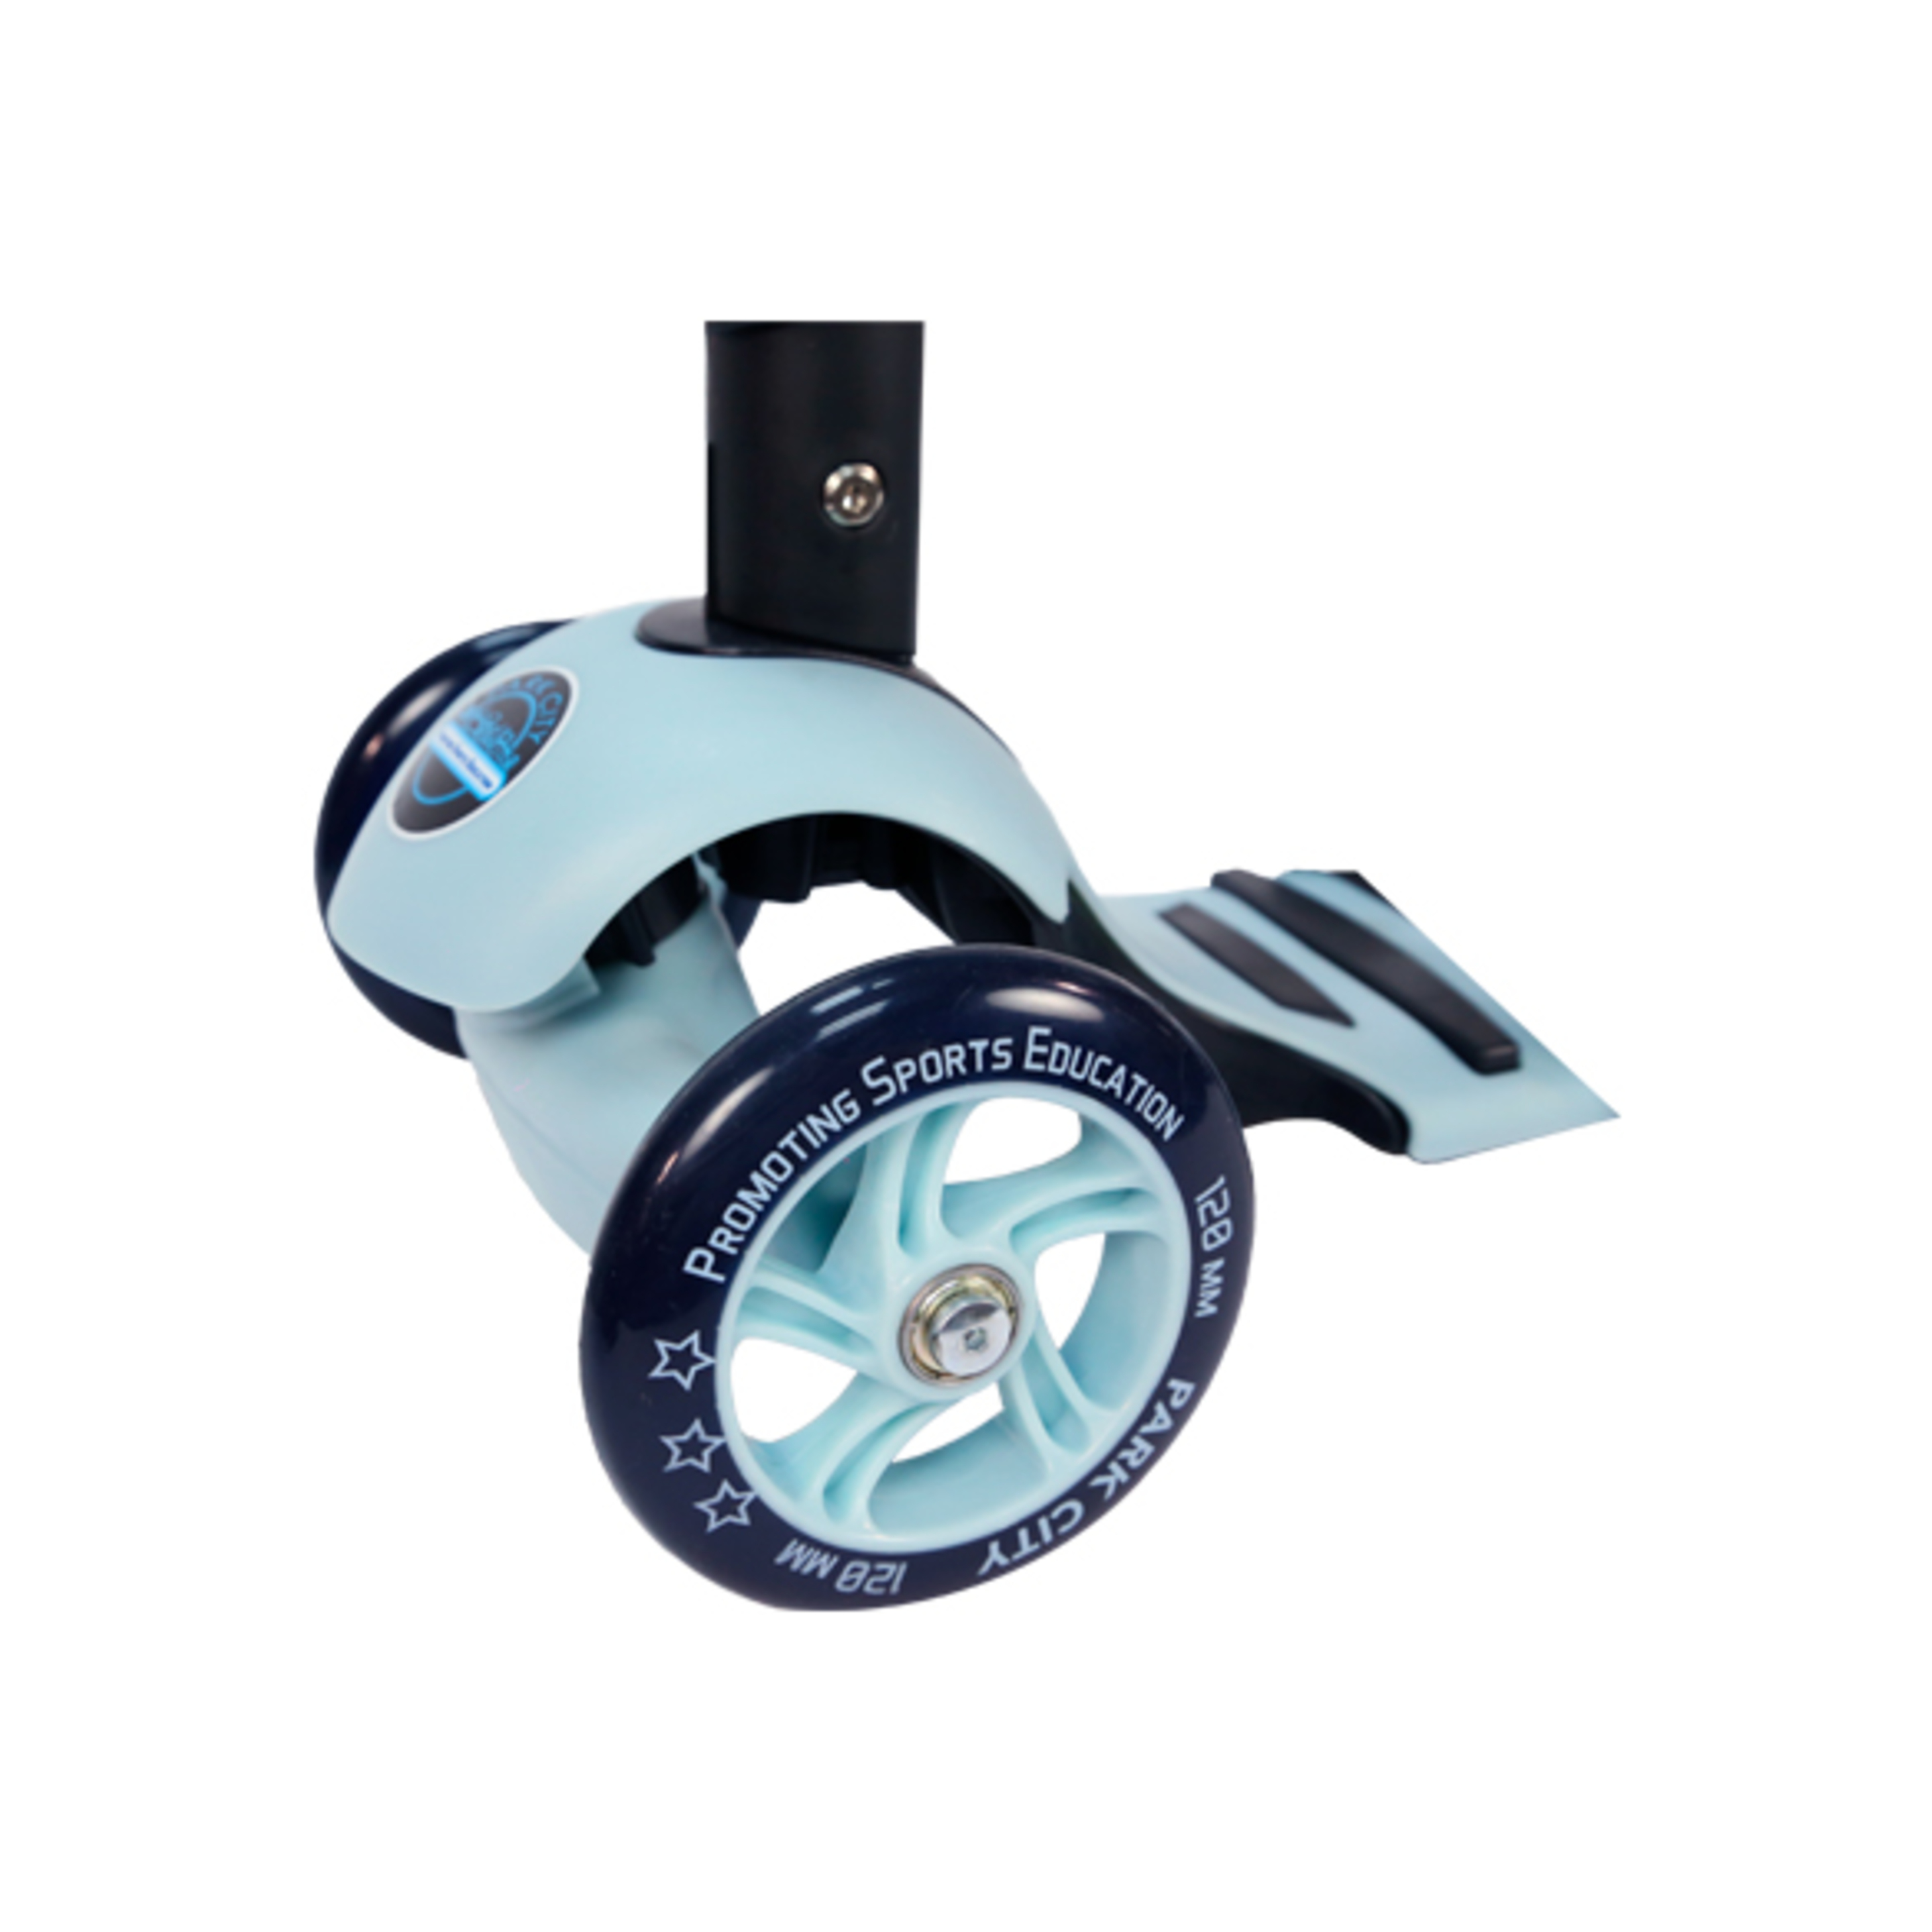 Scooter Special Edition - Azul Claro  MKP